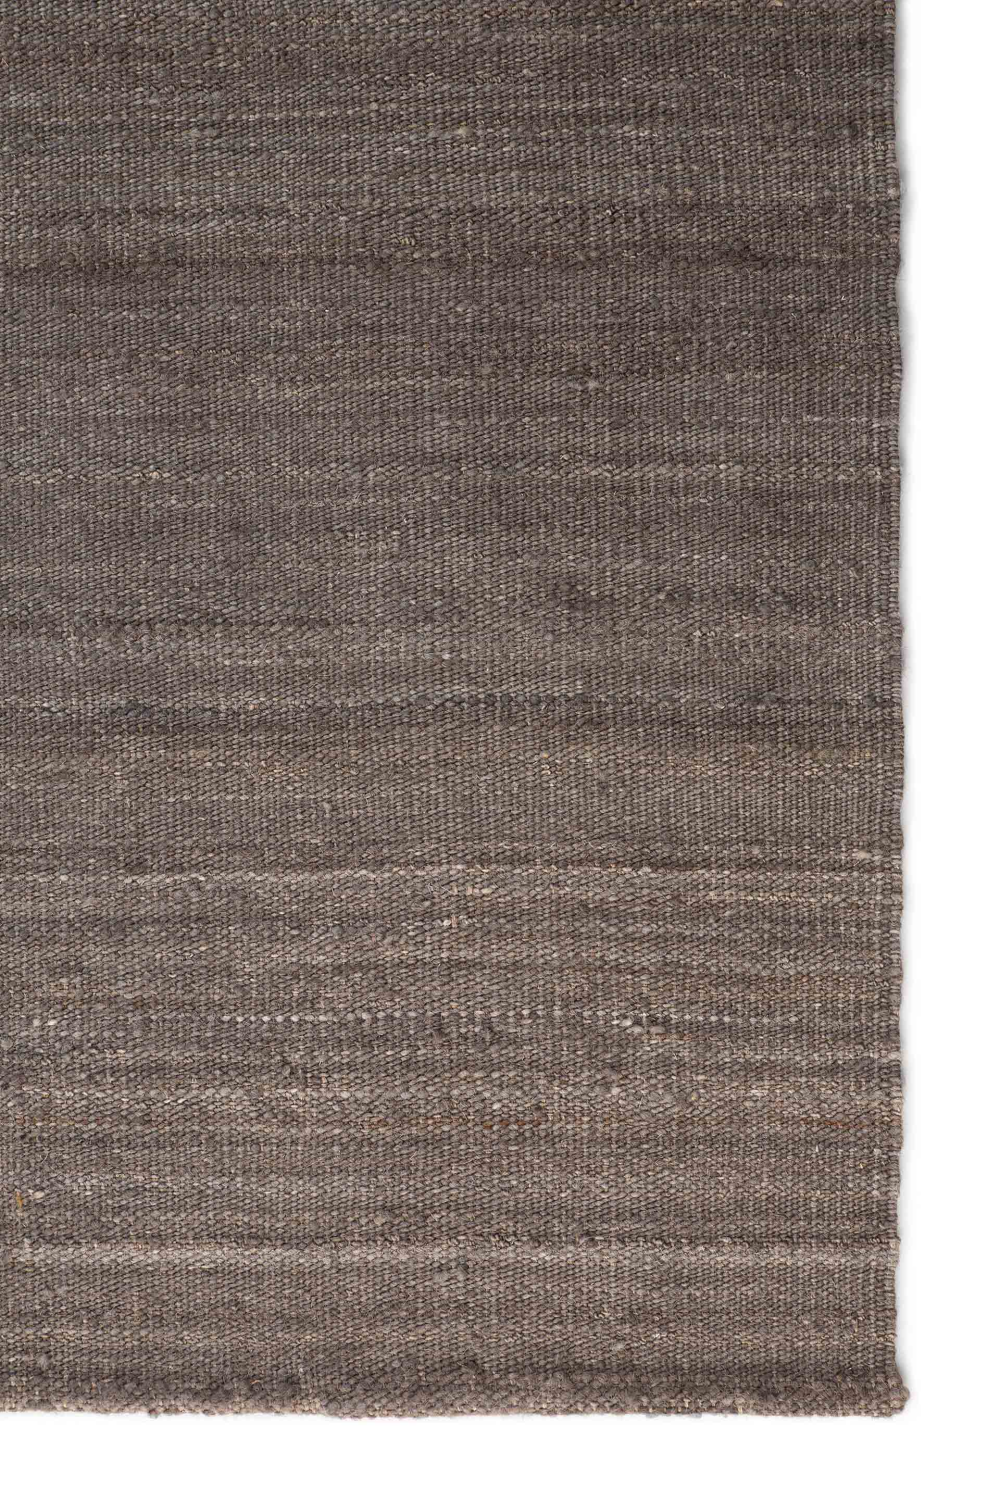 Textured Sheep Wool Rug | Ethnicraft Nomad | OROA.com